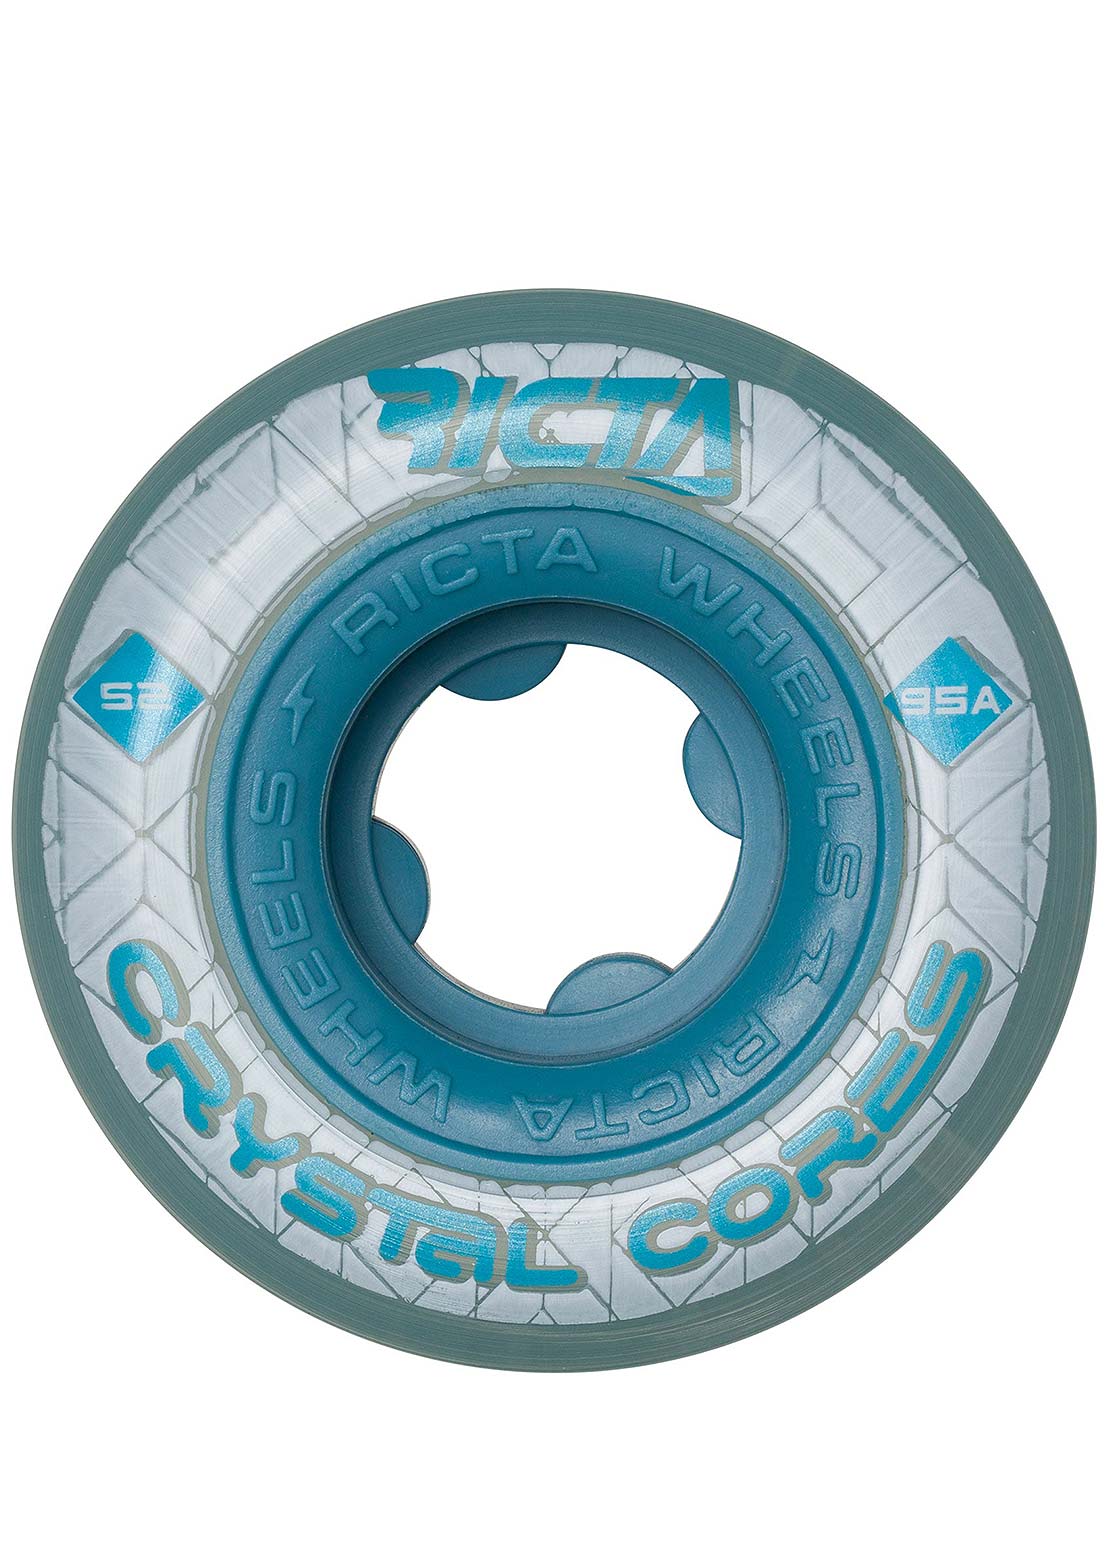 Ricta Crystal Cores 95A Skateboard Wheels 52 mm